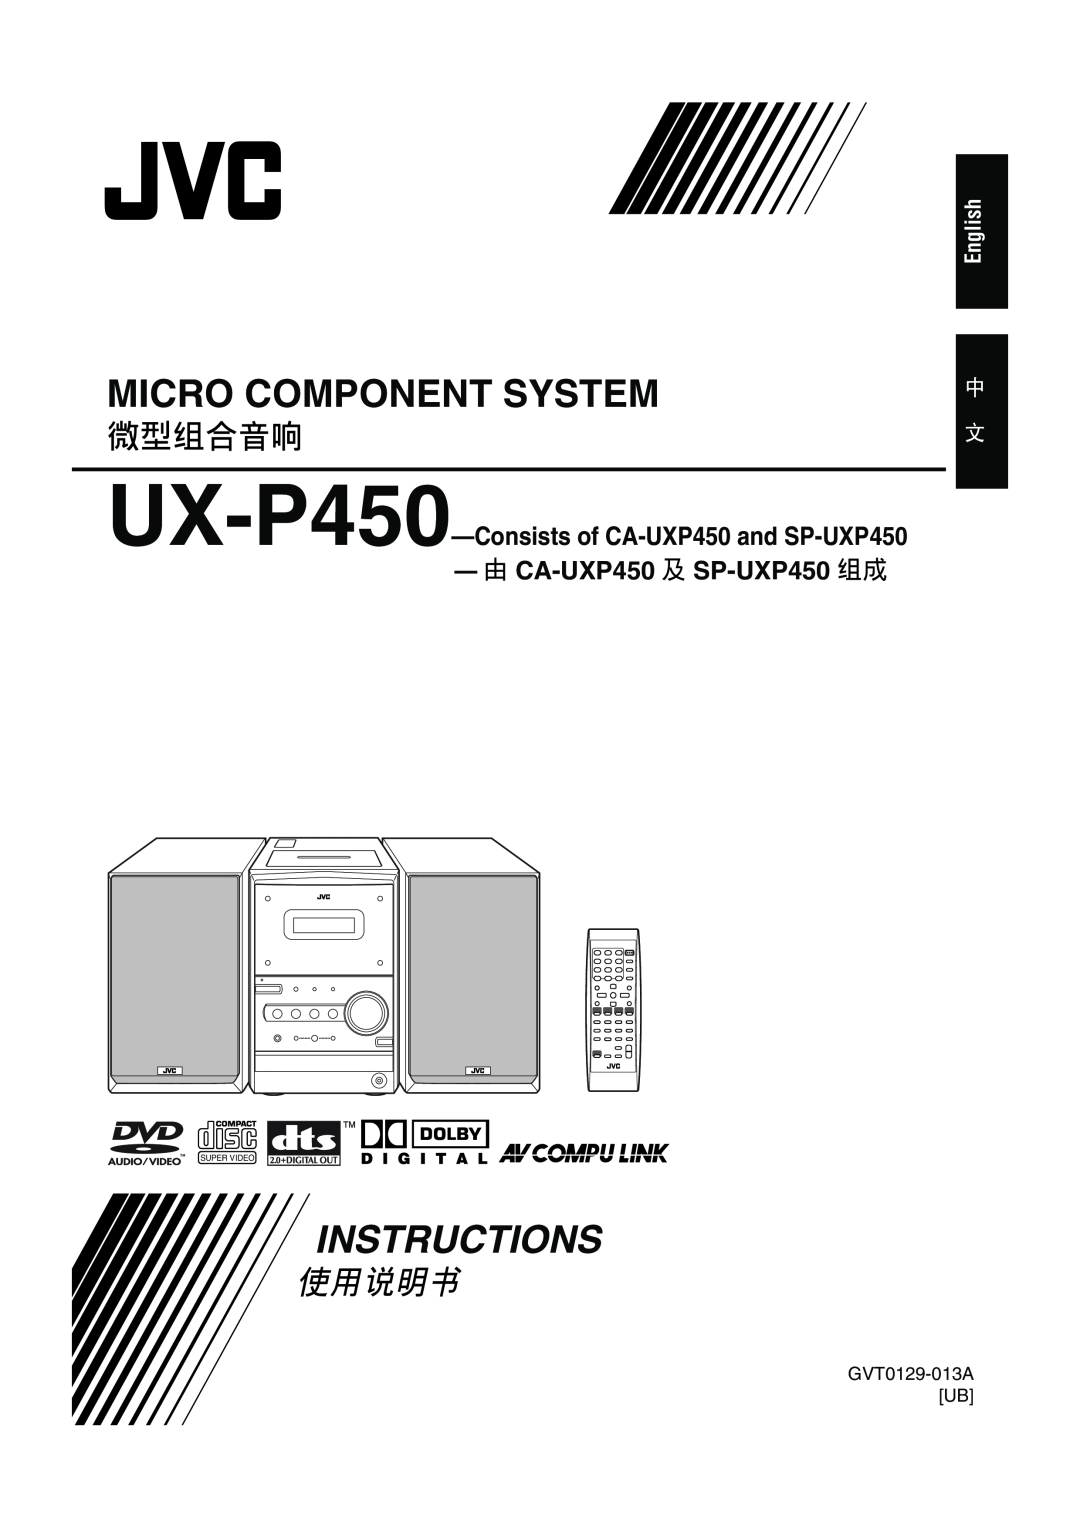 JVC GVT0129-013AUB, Micro Component System, Instructions, 微型組合音響, 使用說明書, UX-P450—Consistsof CA-UXP450and SP-UXP450 